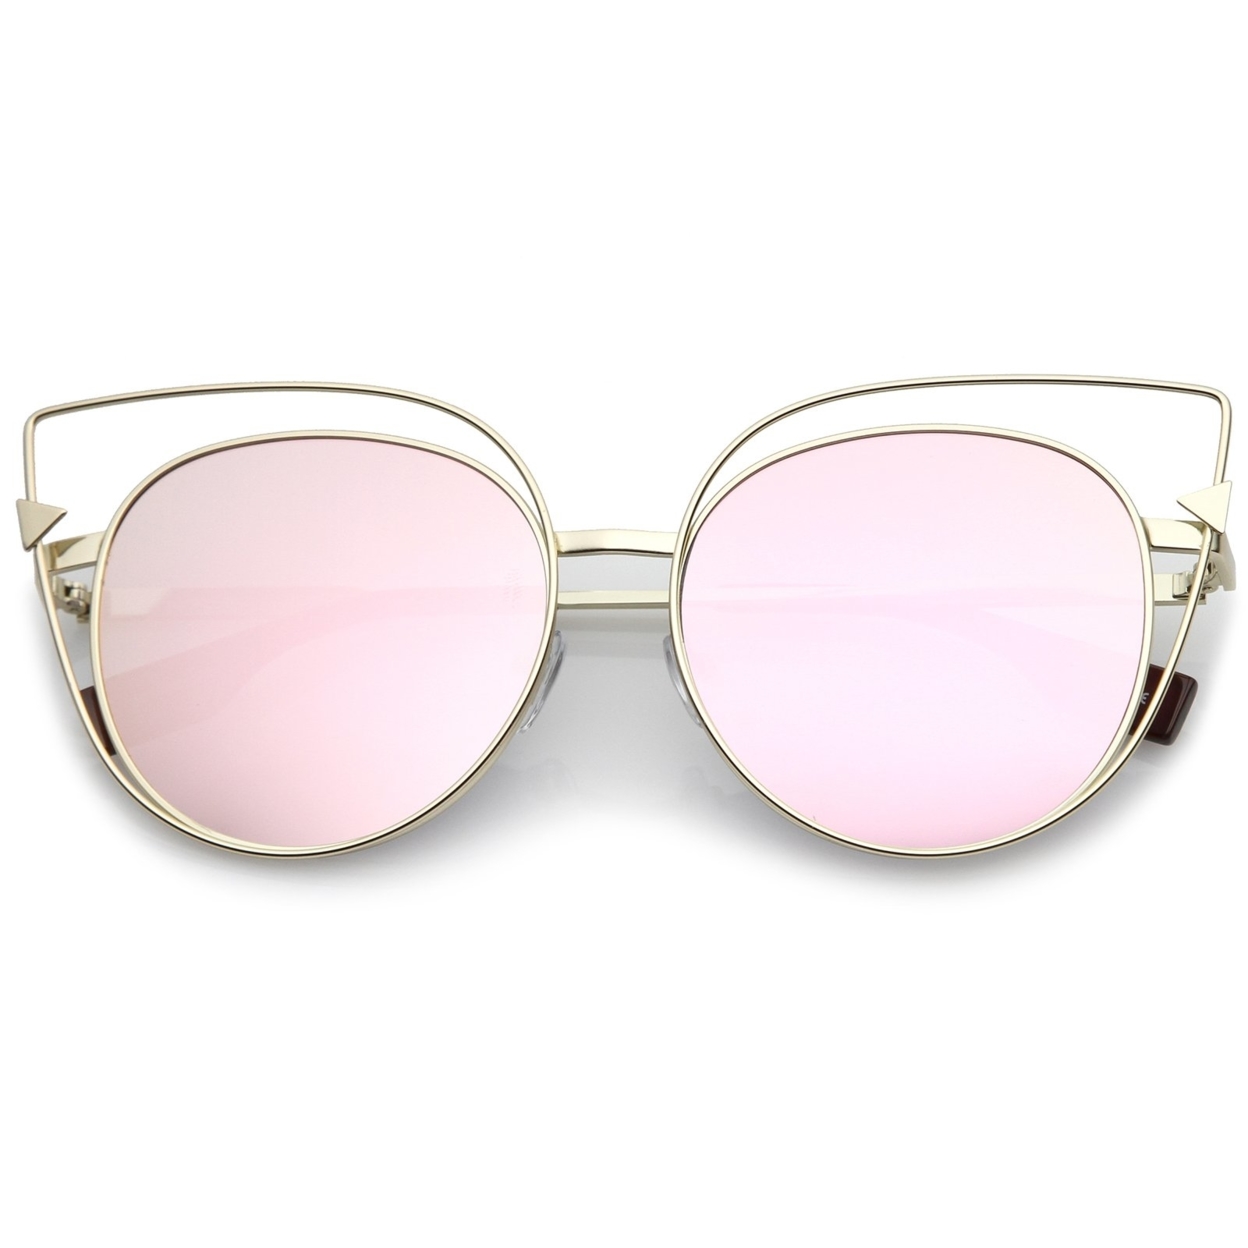 Oversize Metal Cutout Frame Arrow Accent Pink Mirror Flat Lens Cat Eye Sunglasses 57mm - Gold-Gold / Pink Mirror